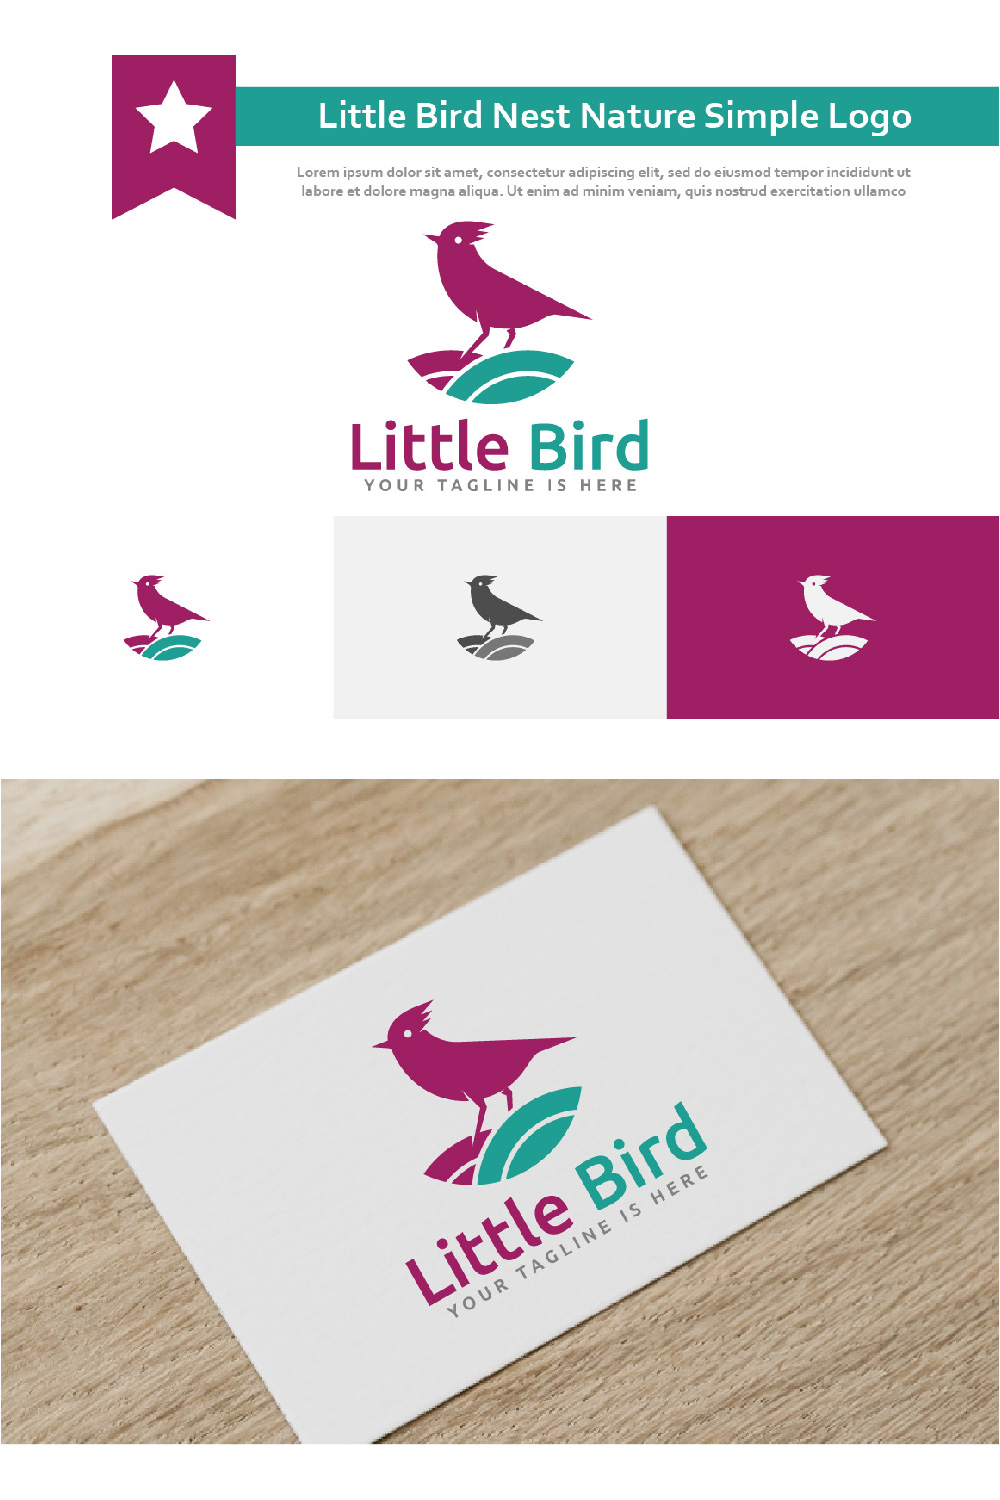 Cute Little Bird Nest Sound Nature Peace Simple Logo pinterest.